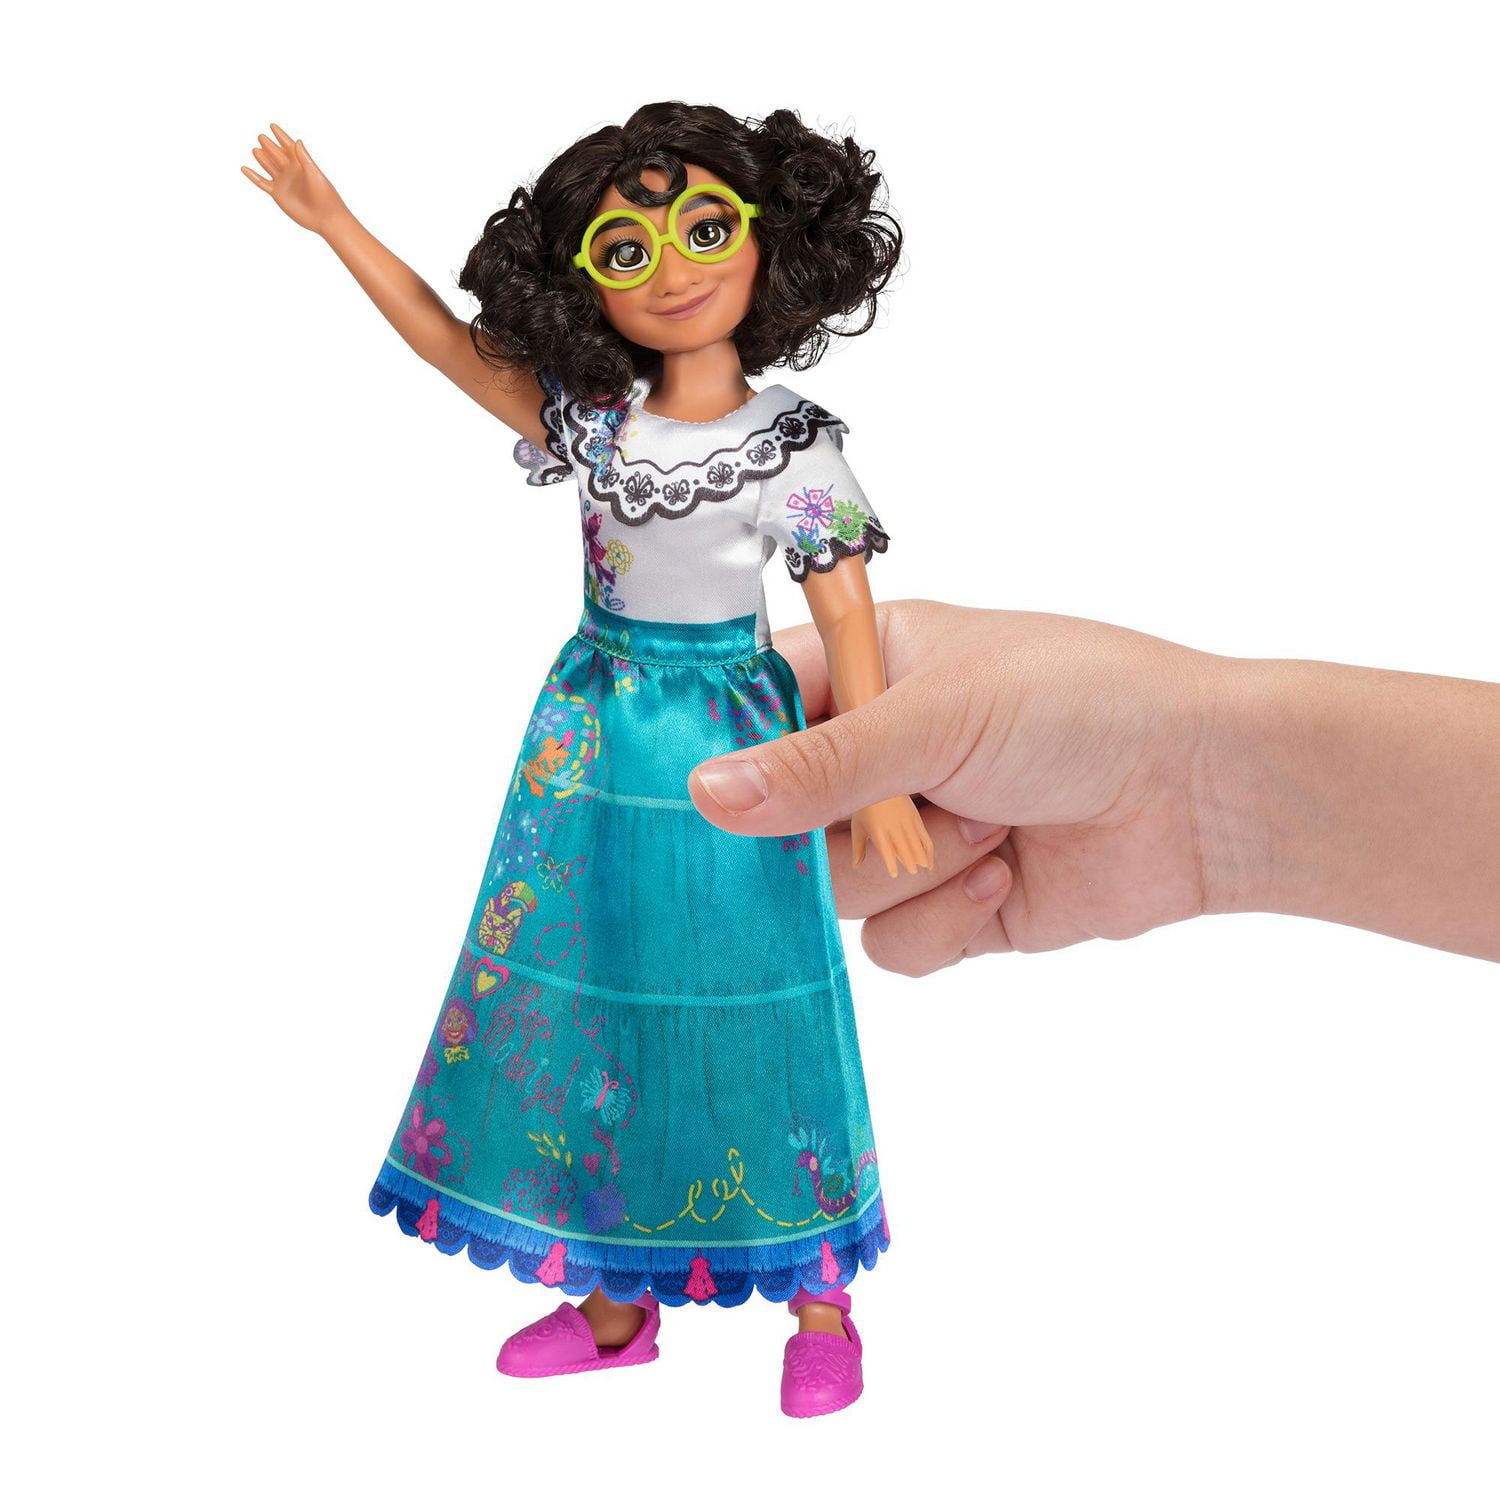 Disney Encanto Mirabel 11 inch Fashion Doll, Inspired by Disney's